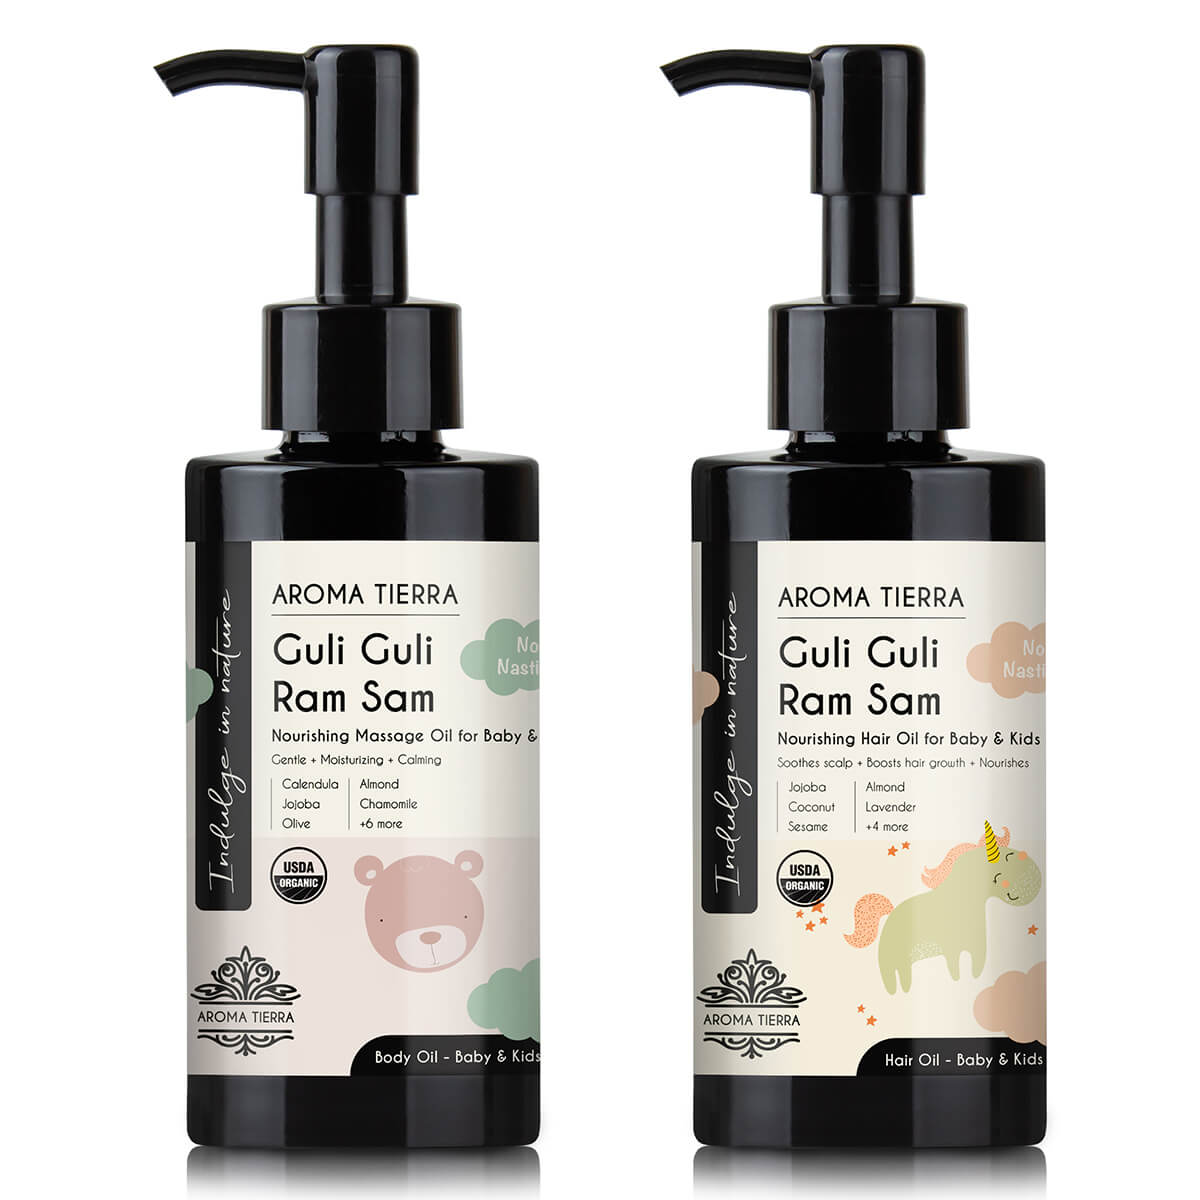 Guli Guli Ram Sam - Gift Set of 2 Organic Oils for Baby & Kids